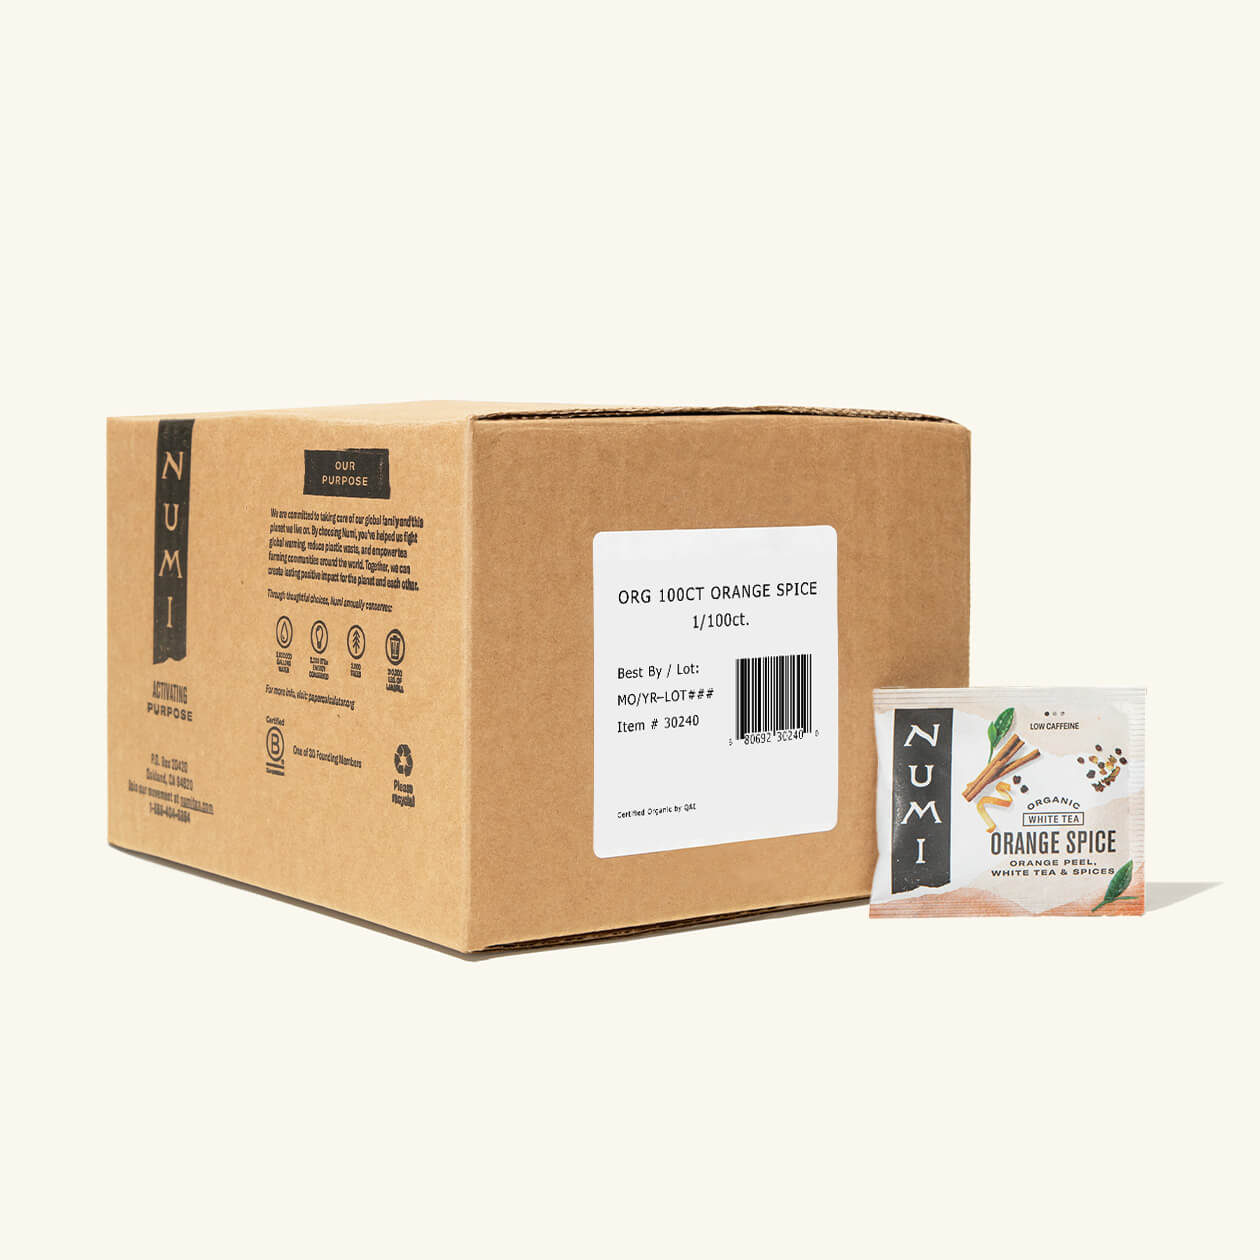 The 100 count box of Numi Orange Spice tea bags on a cream background